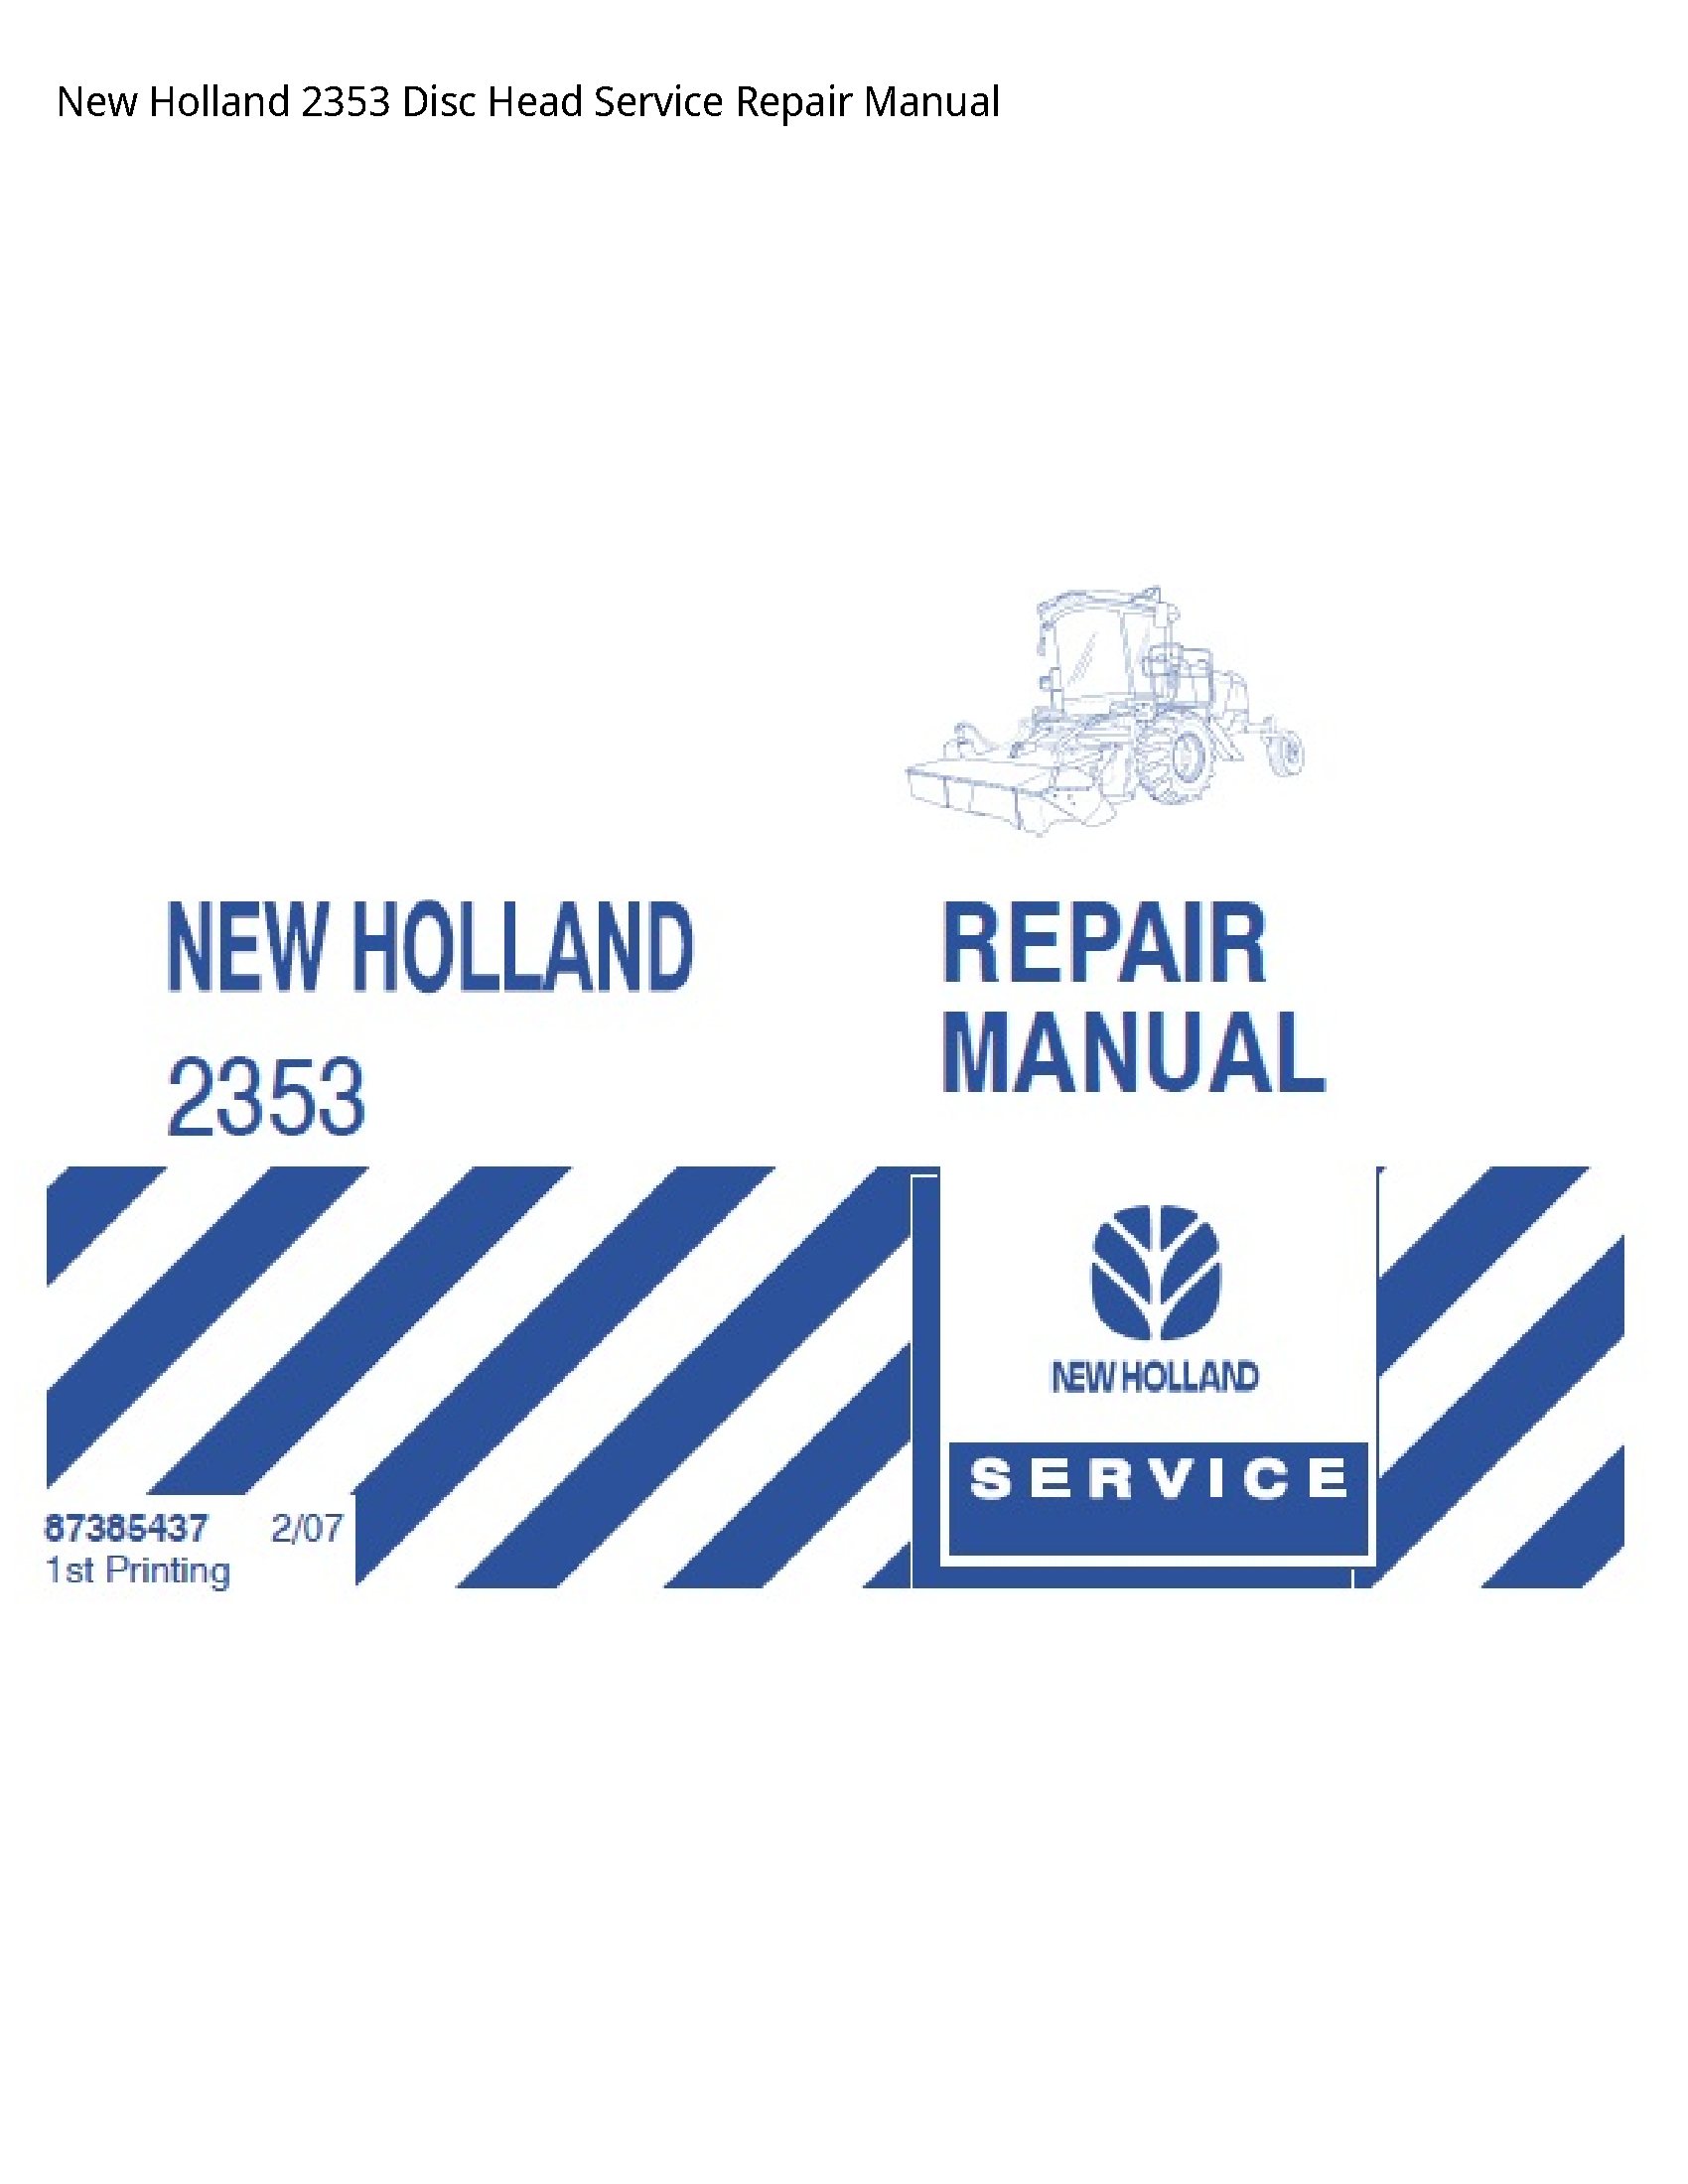 New Holland 2353 Disc Head manual